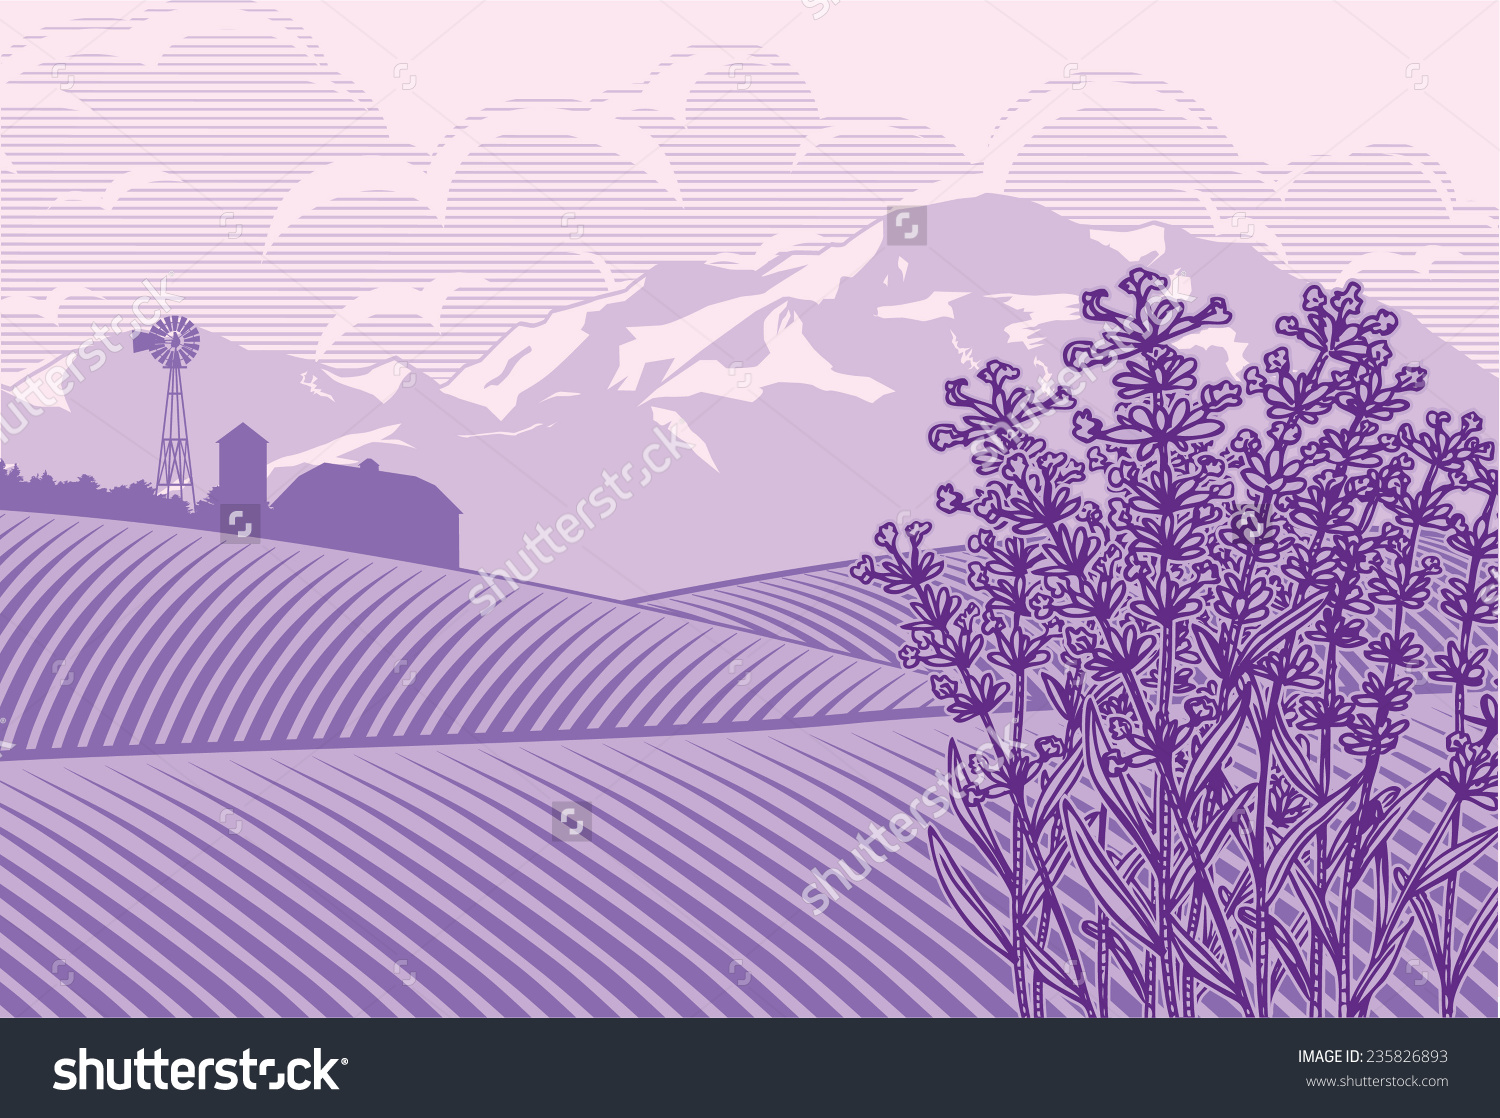 Lavender field clipart hd.